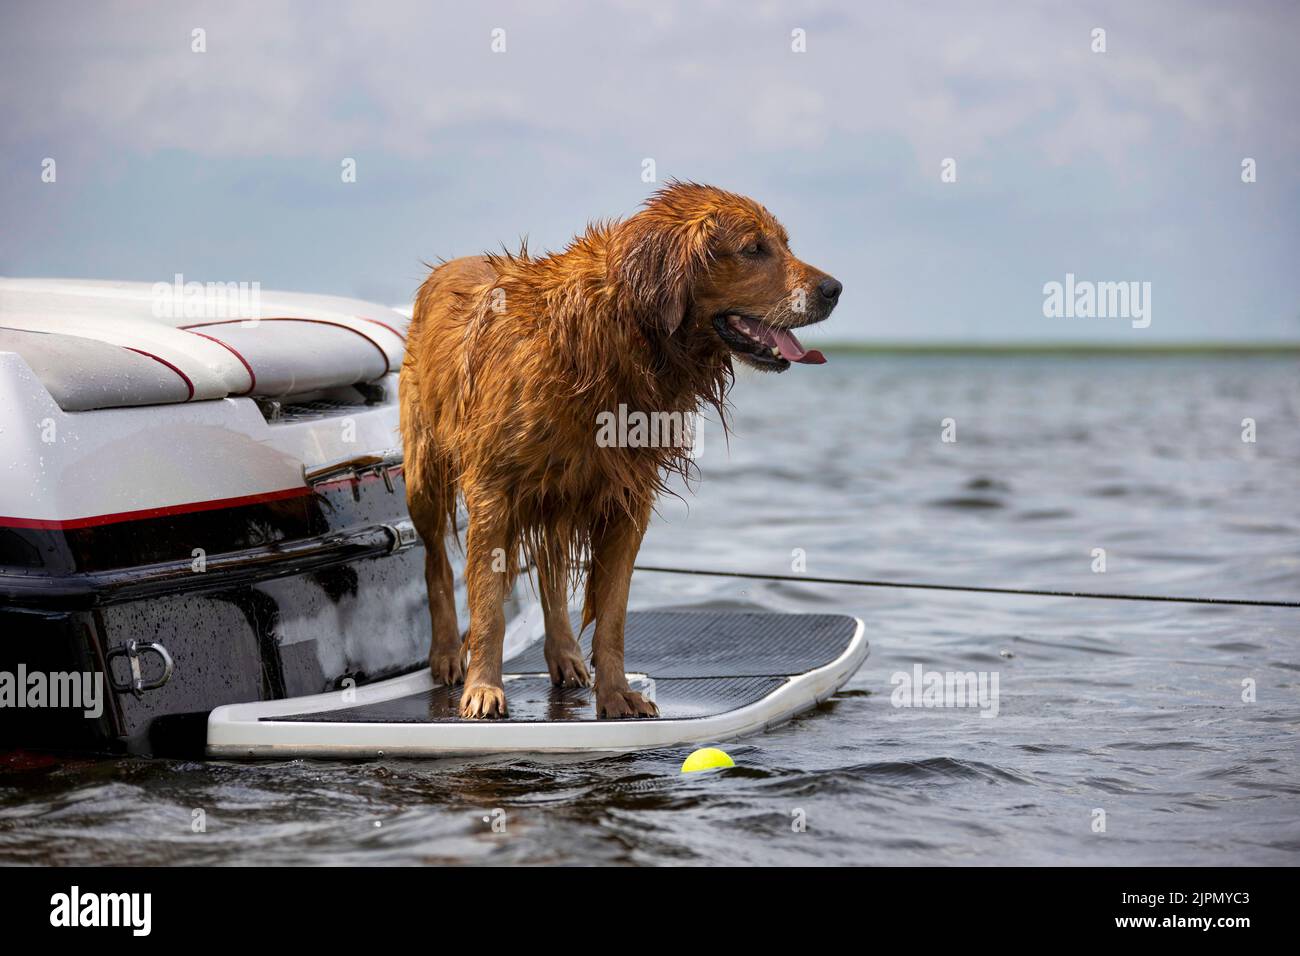 Golden retriever dog standing alone on the swim platform of a boat Stock Photo